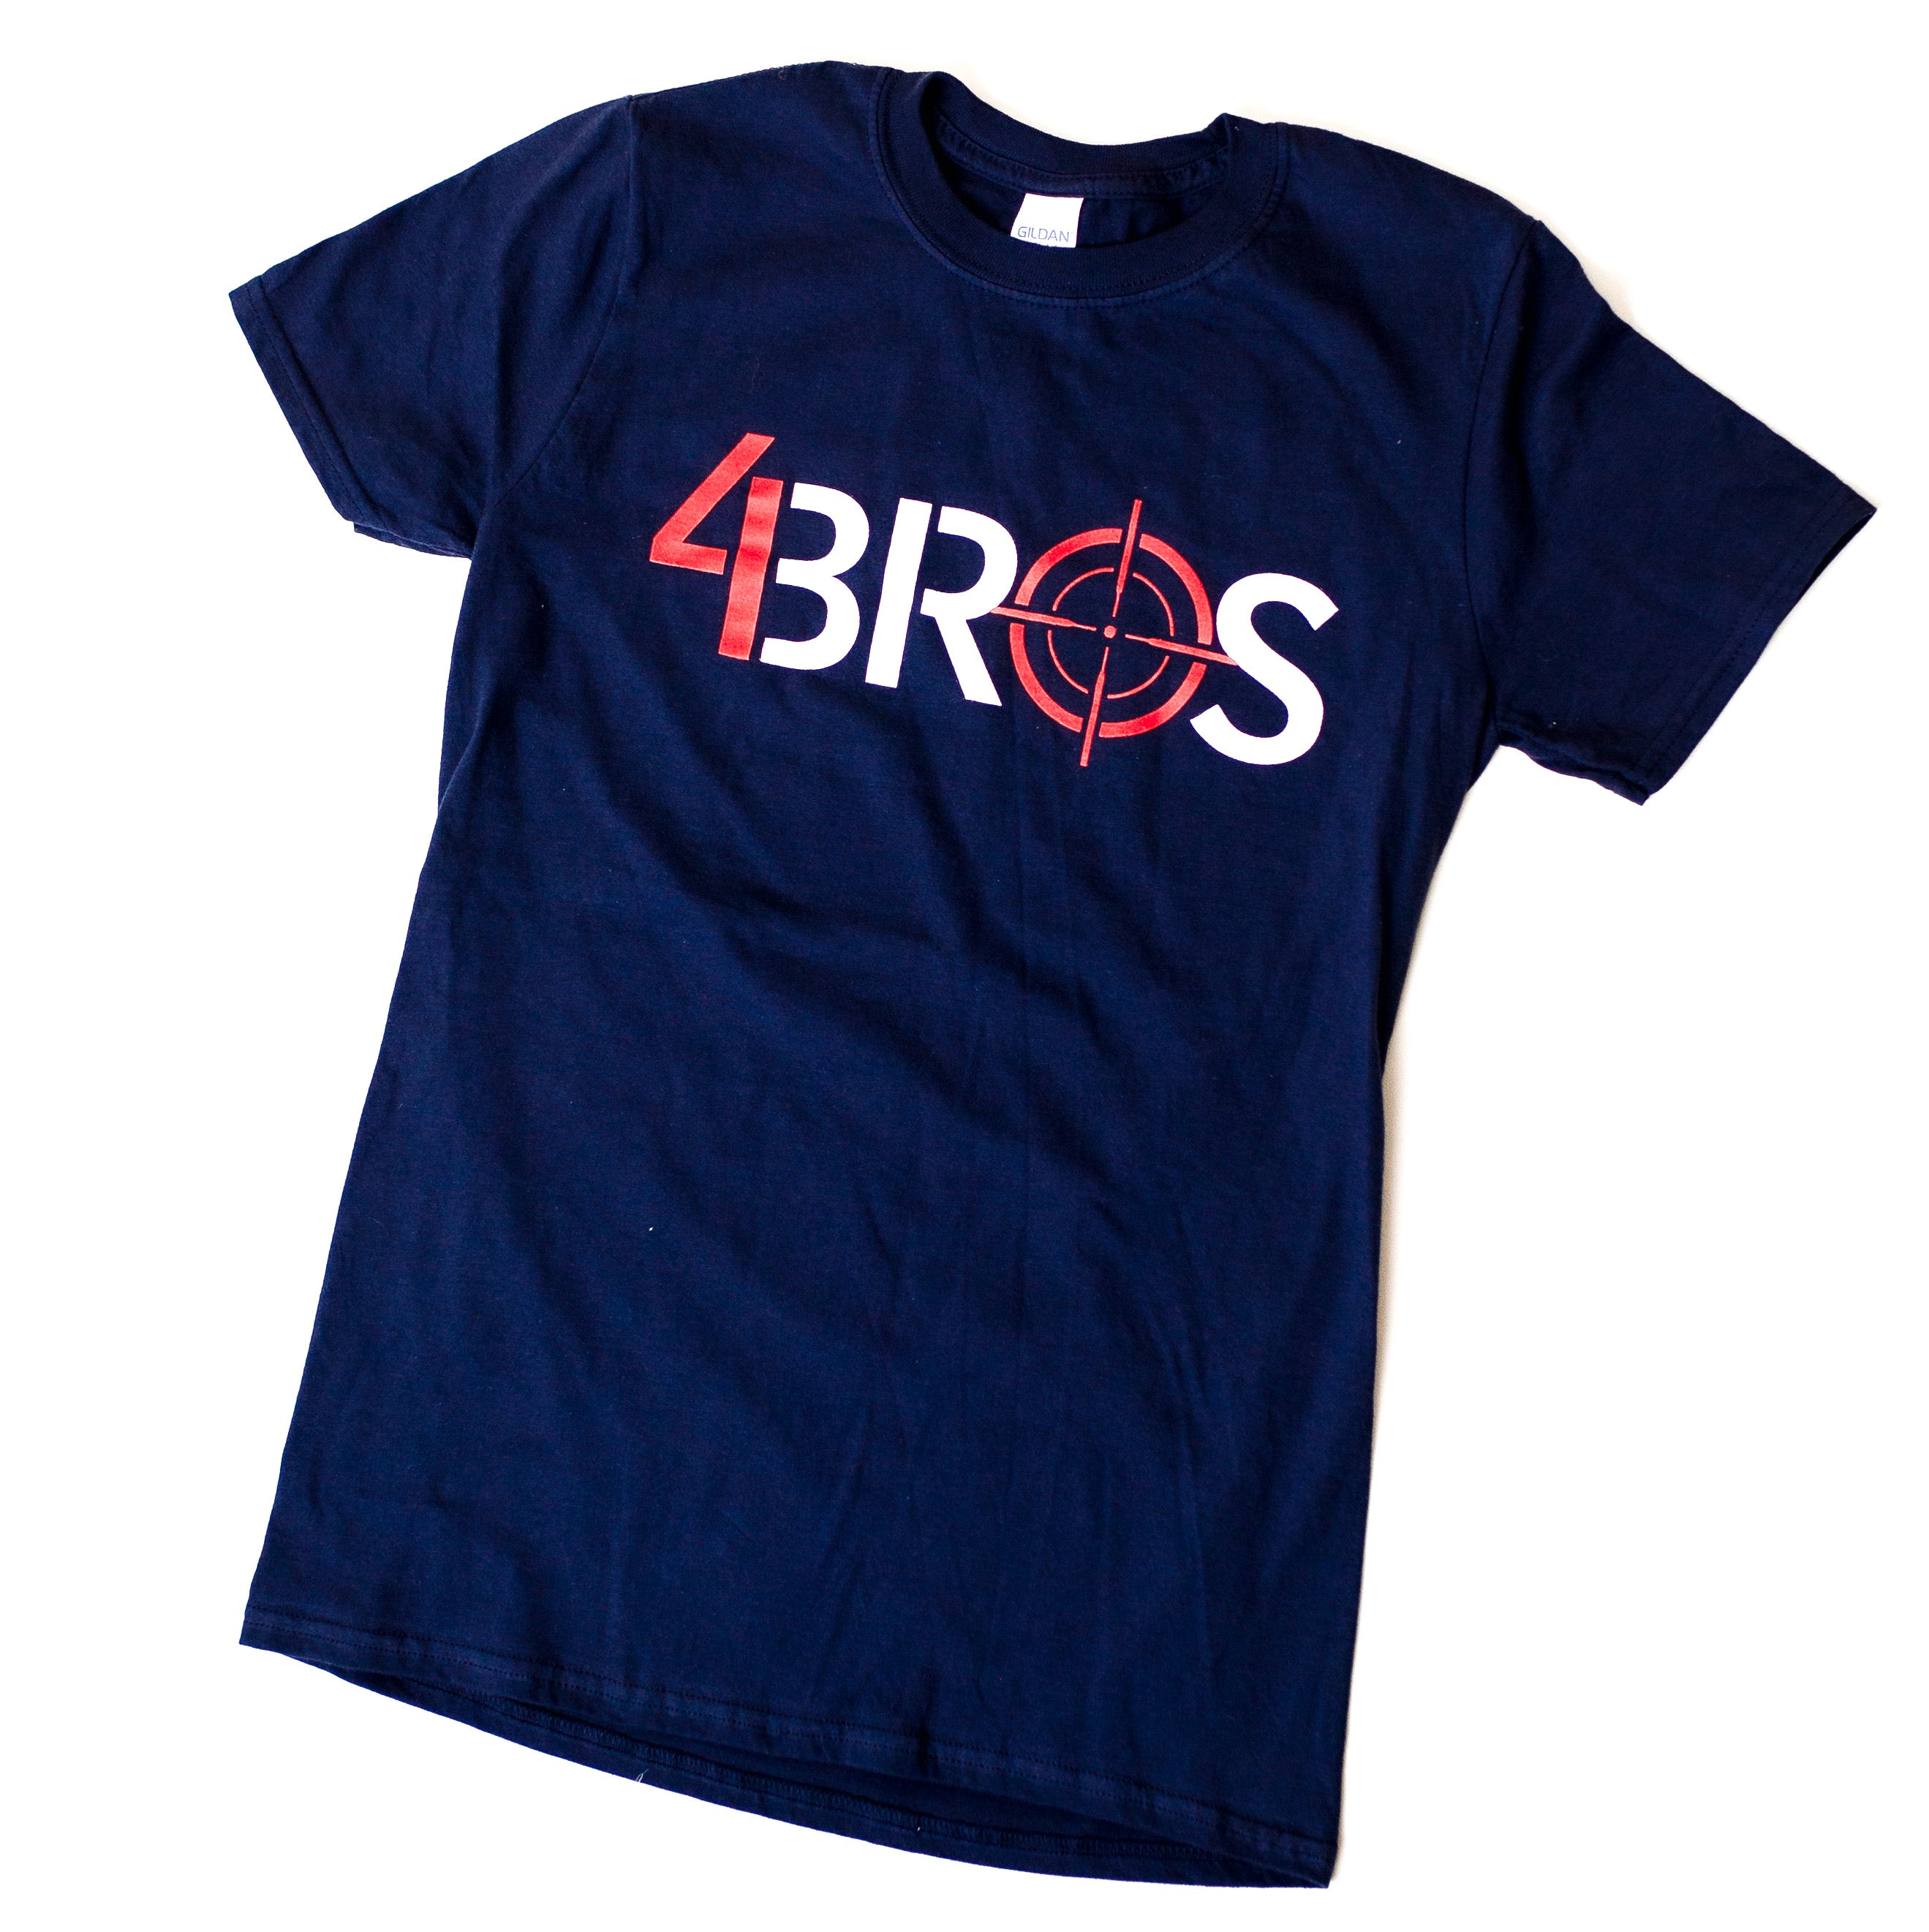 4Bros T-Shirt